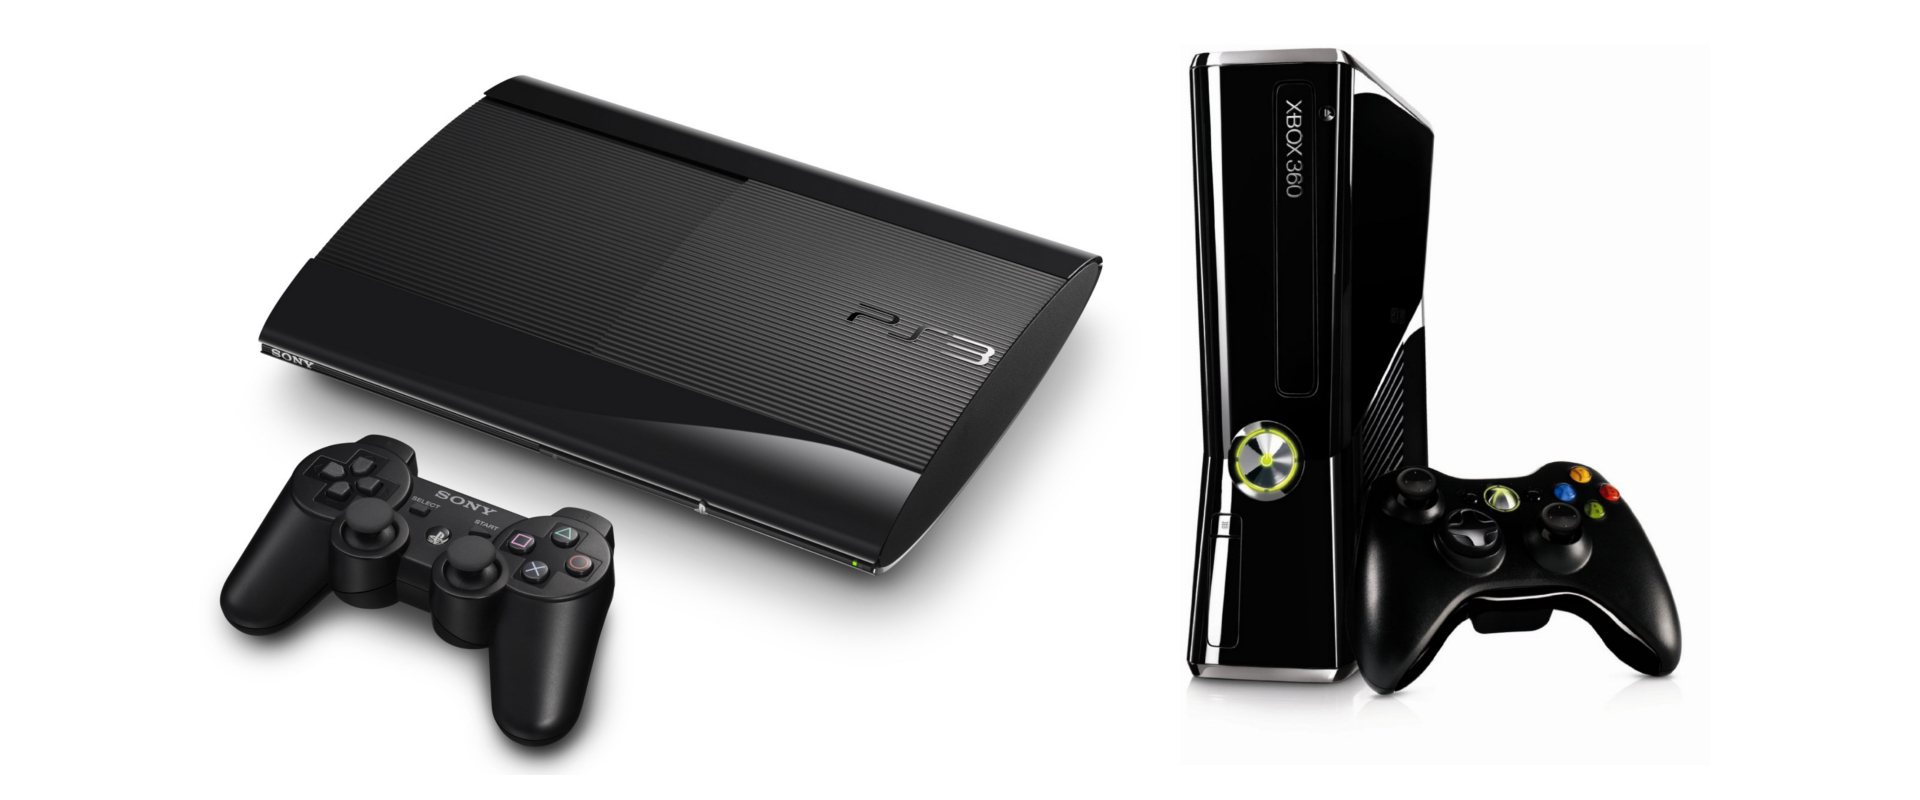 Playstation 3 ps3. Sony ps3 super Slim. Ps3 super Slim 500gb. PLAYSTATION 3 super Slim. Sony ps3 super Slim 500gb.